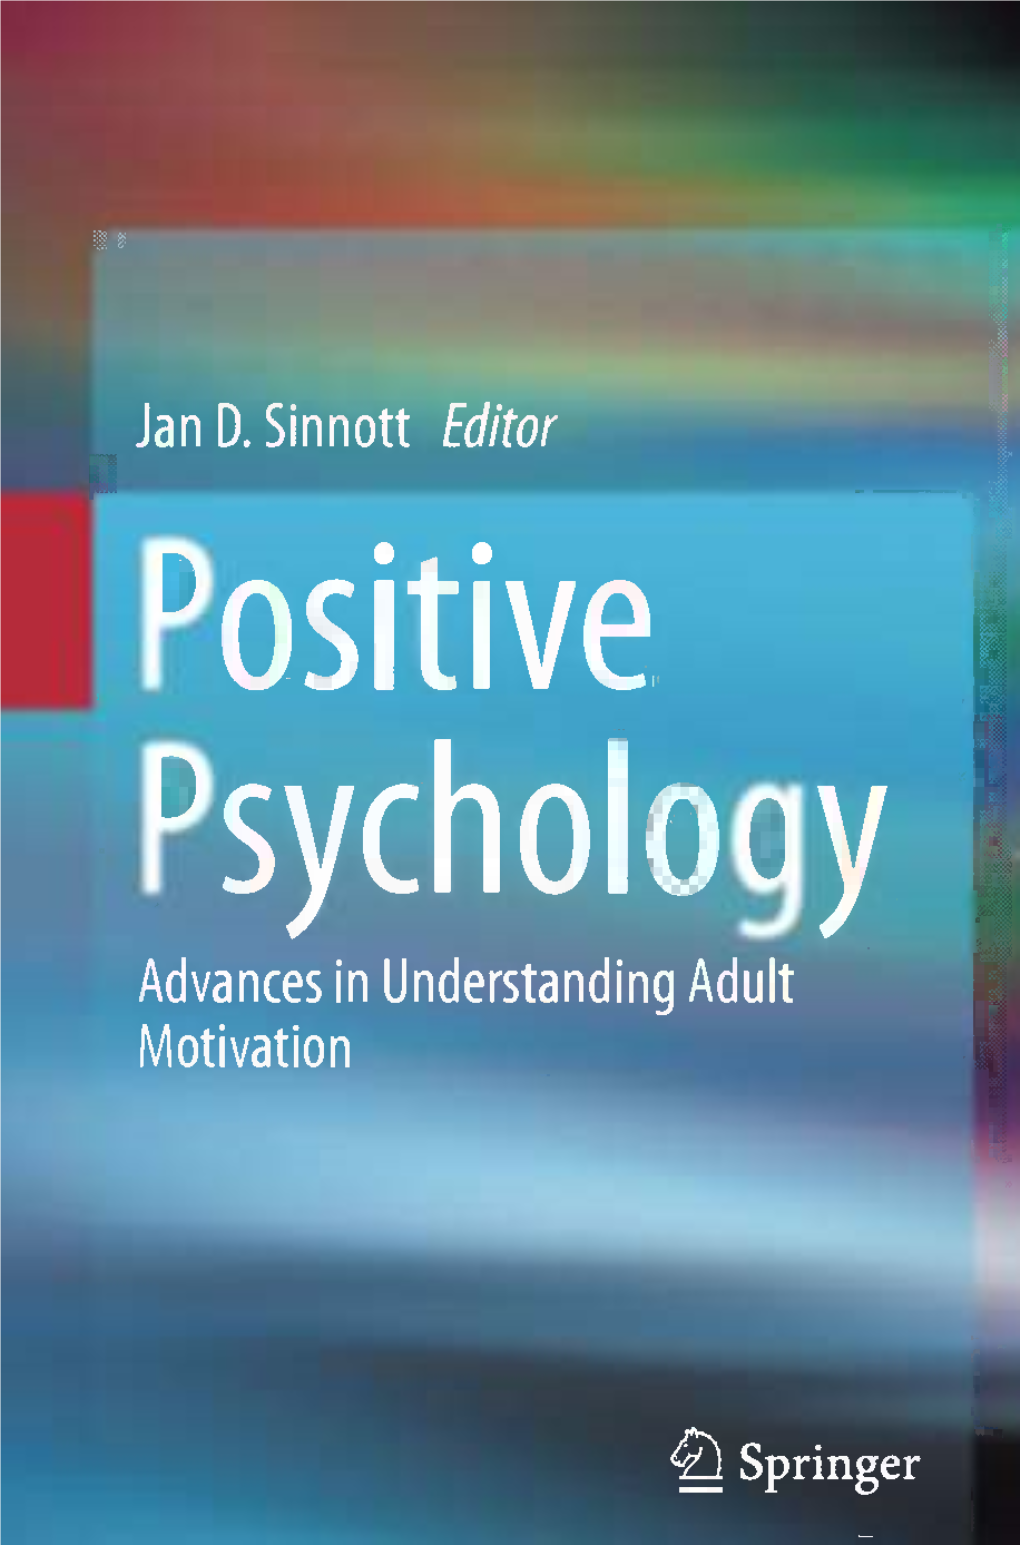 A Seminar in Positive Psychology